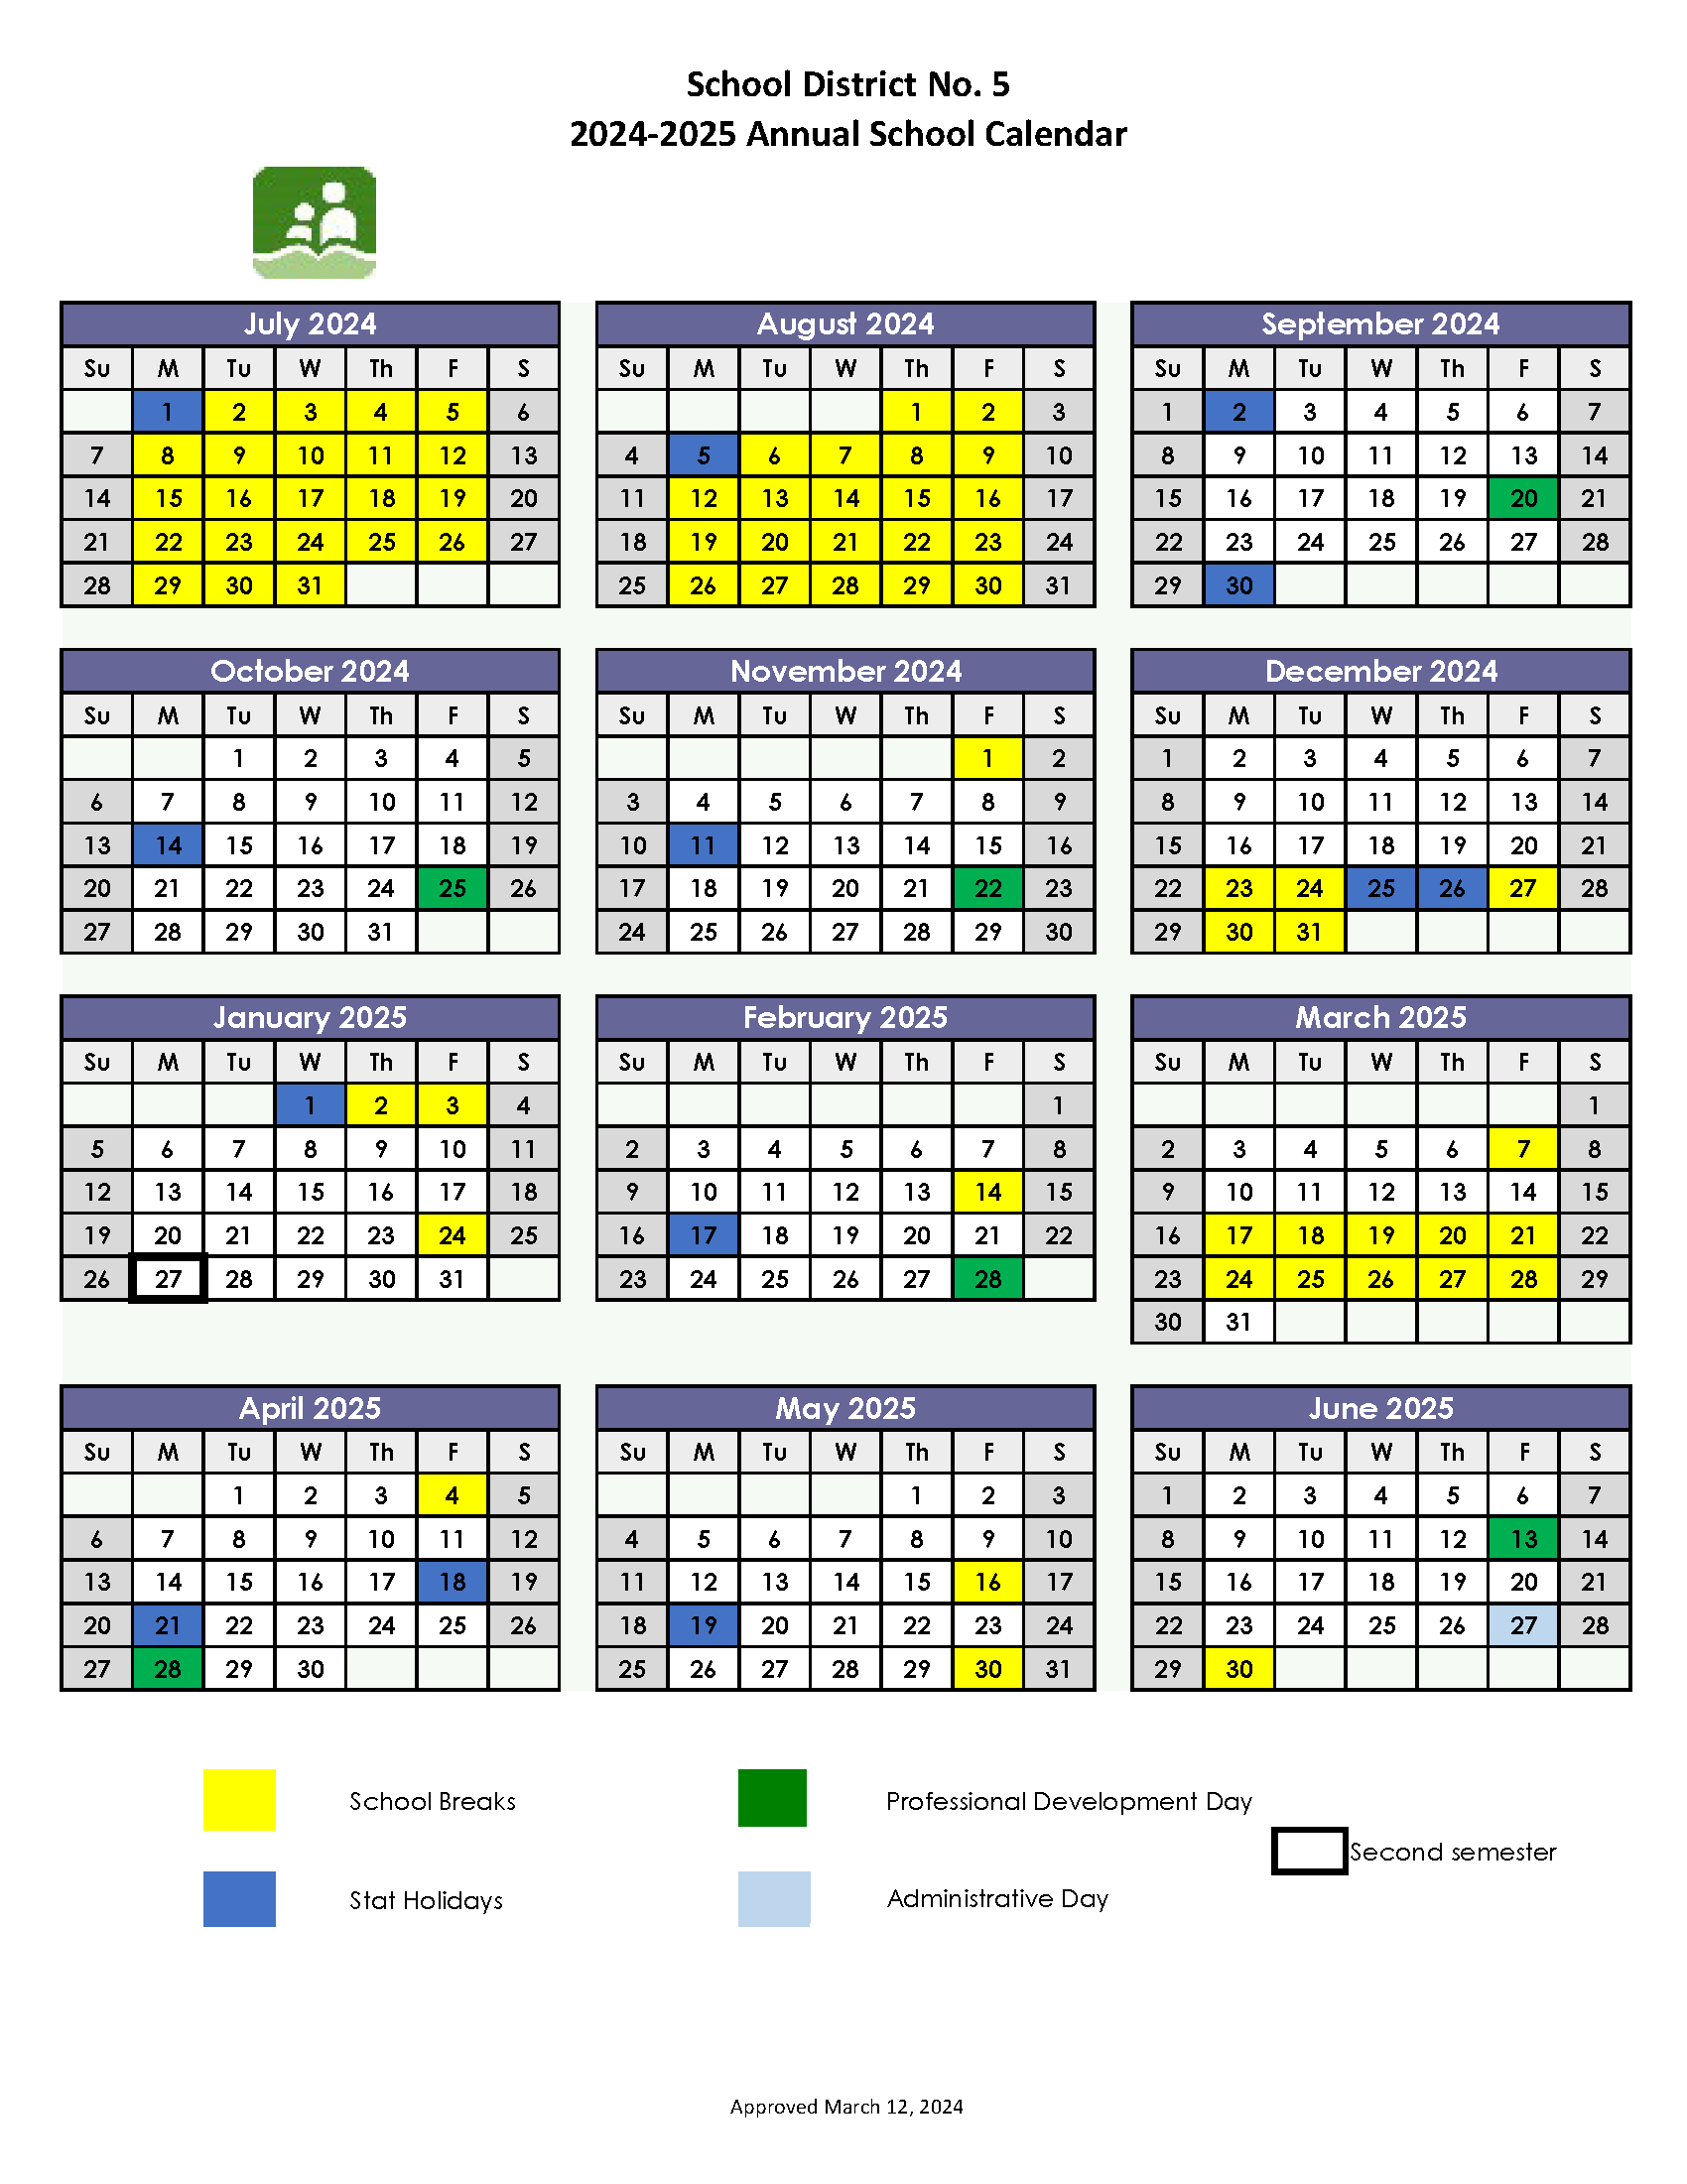 2024.2025 School District 5 Calendar - Final_Page_1.png